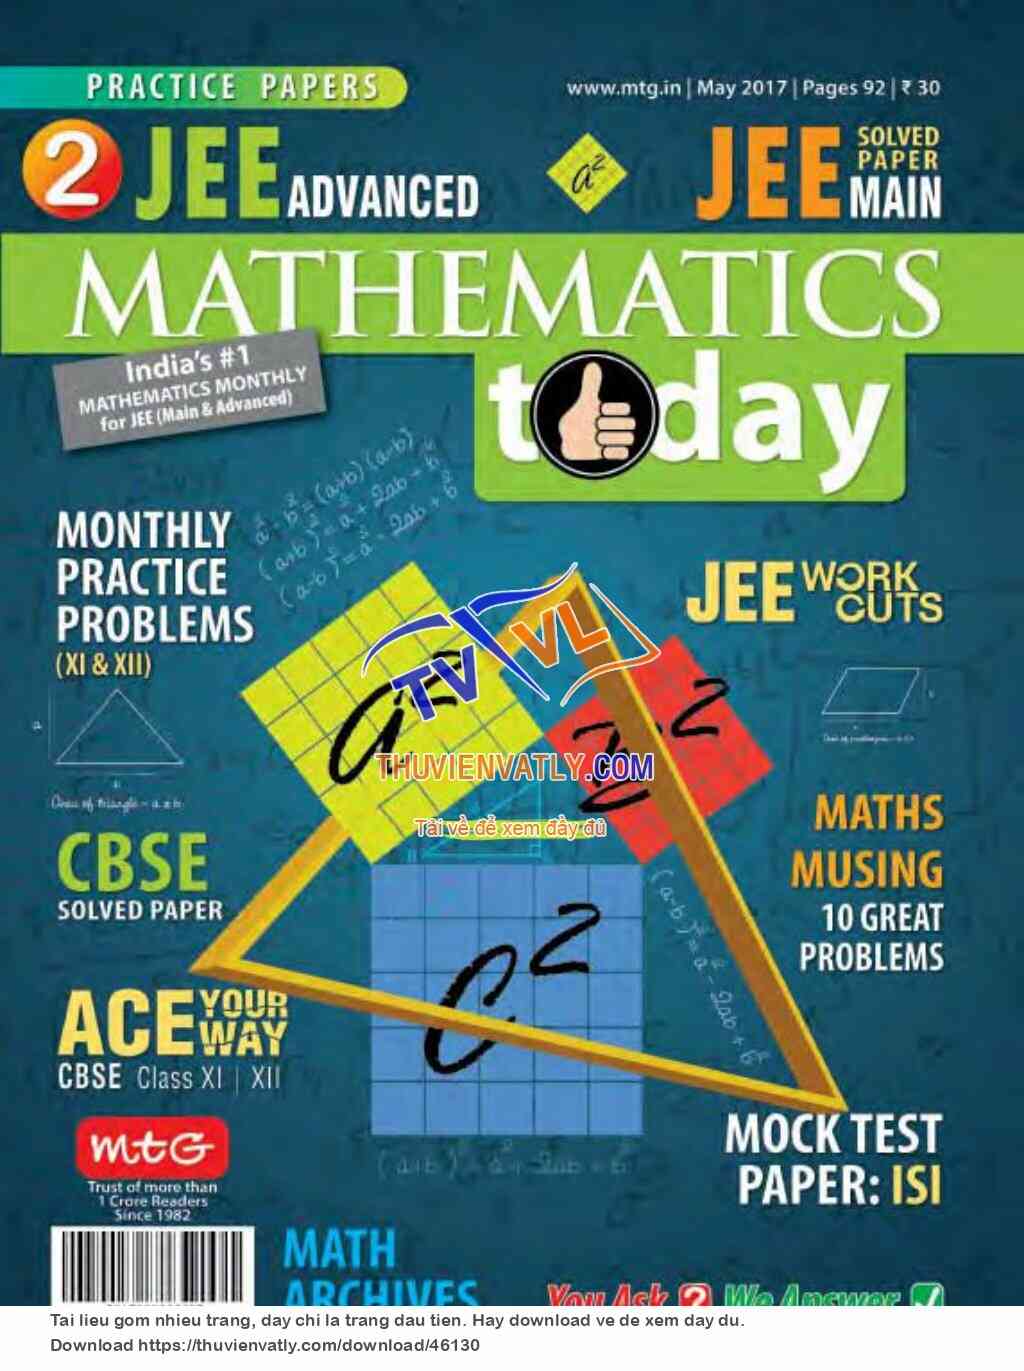 Mathematics Today May 2017